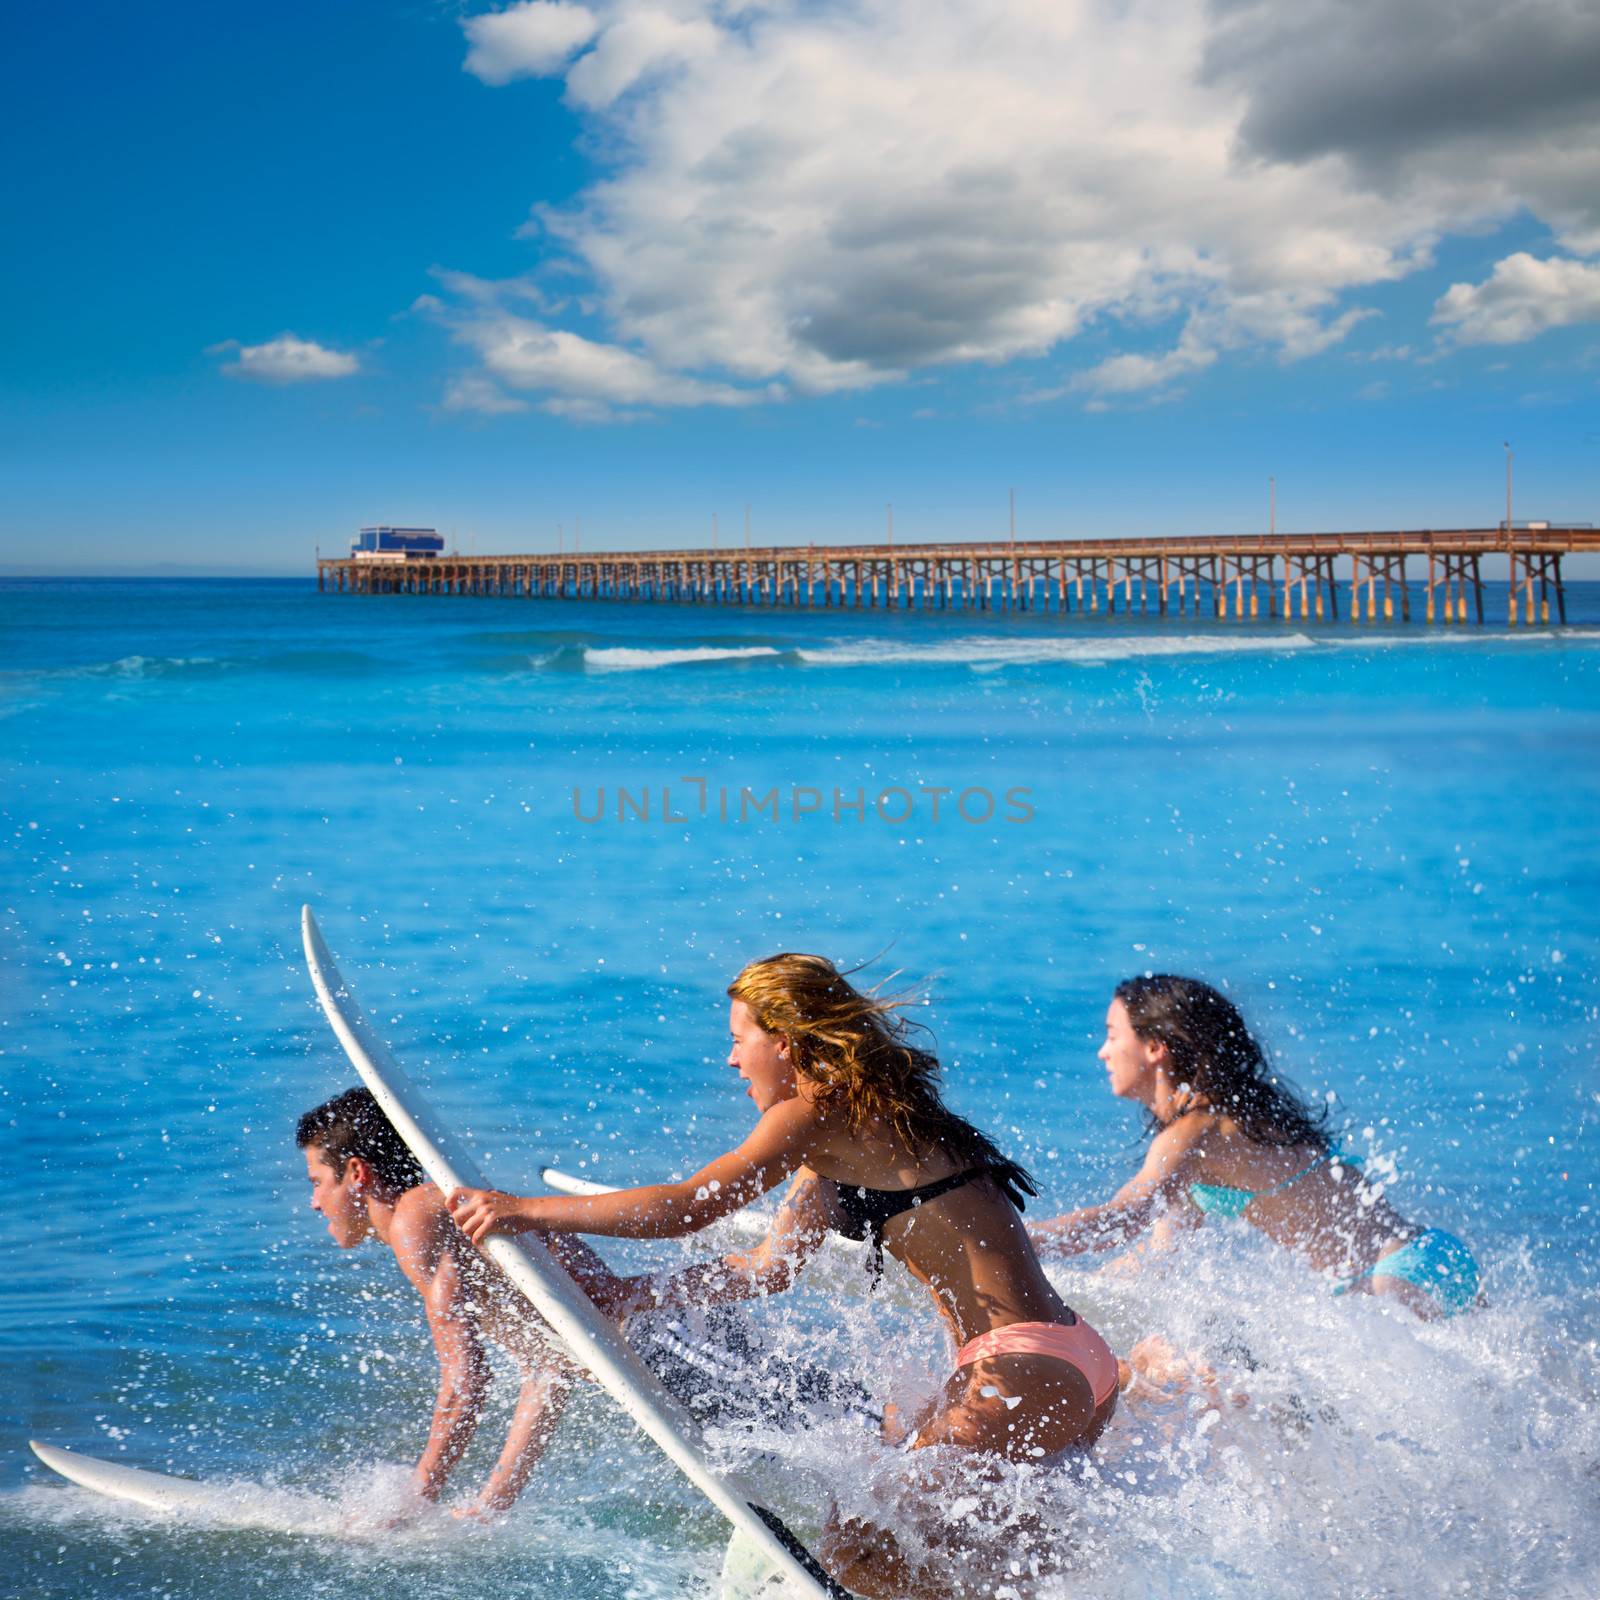 Teenager surfers running jumping on surfboards by lunamarina